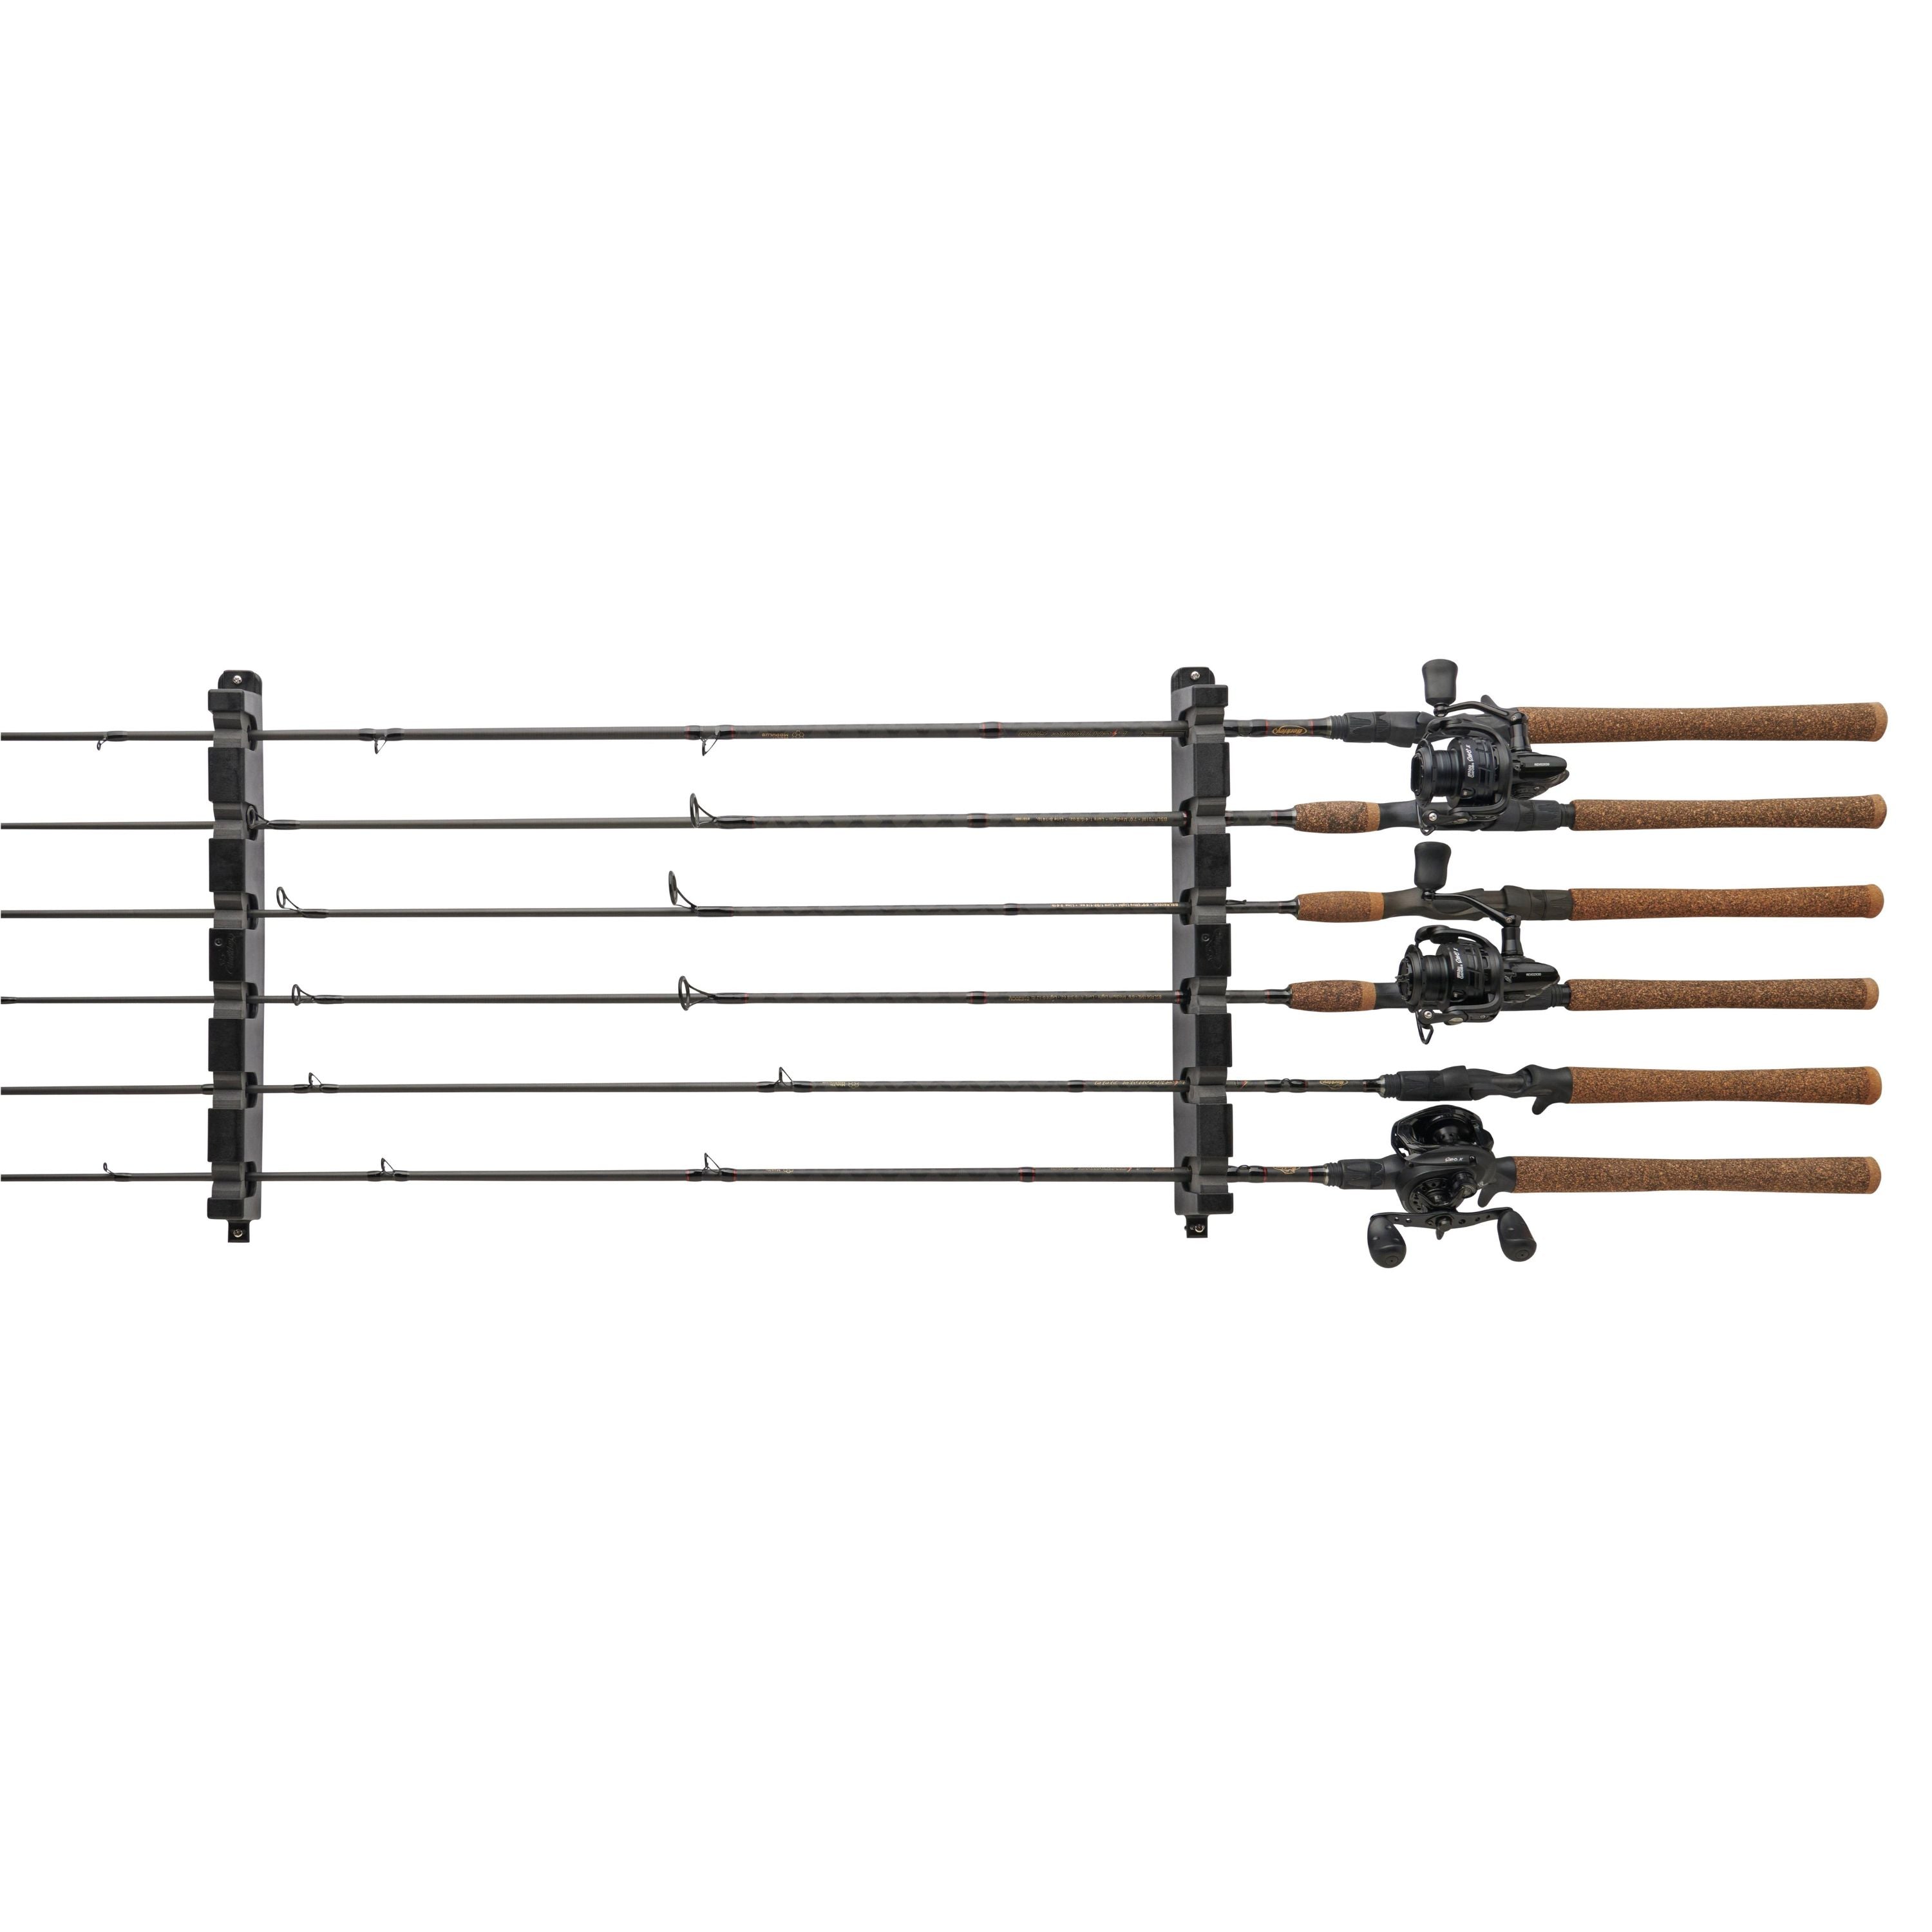 Support horizontal - 6 cannes à pêche||Horizontal rods rack - 6 rods